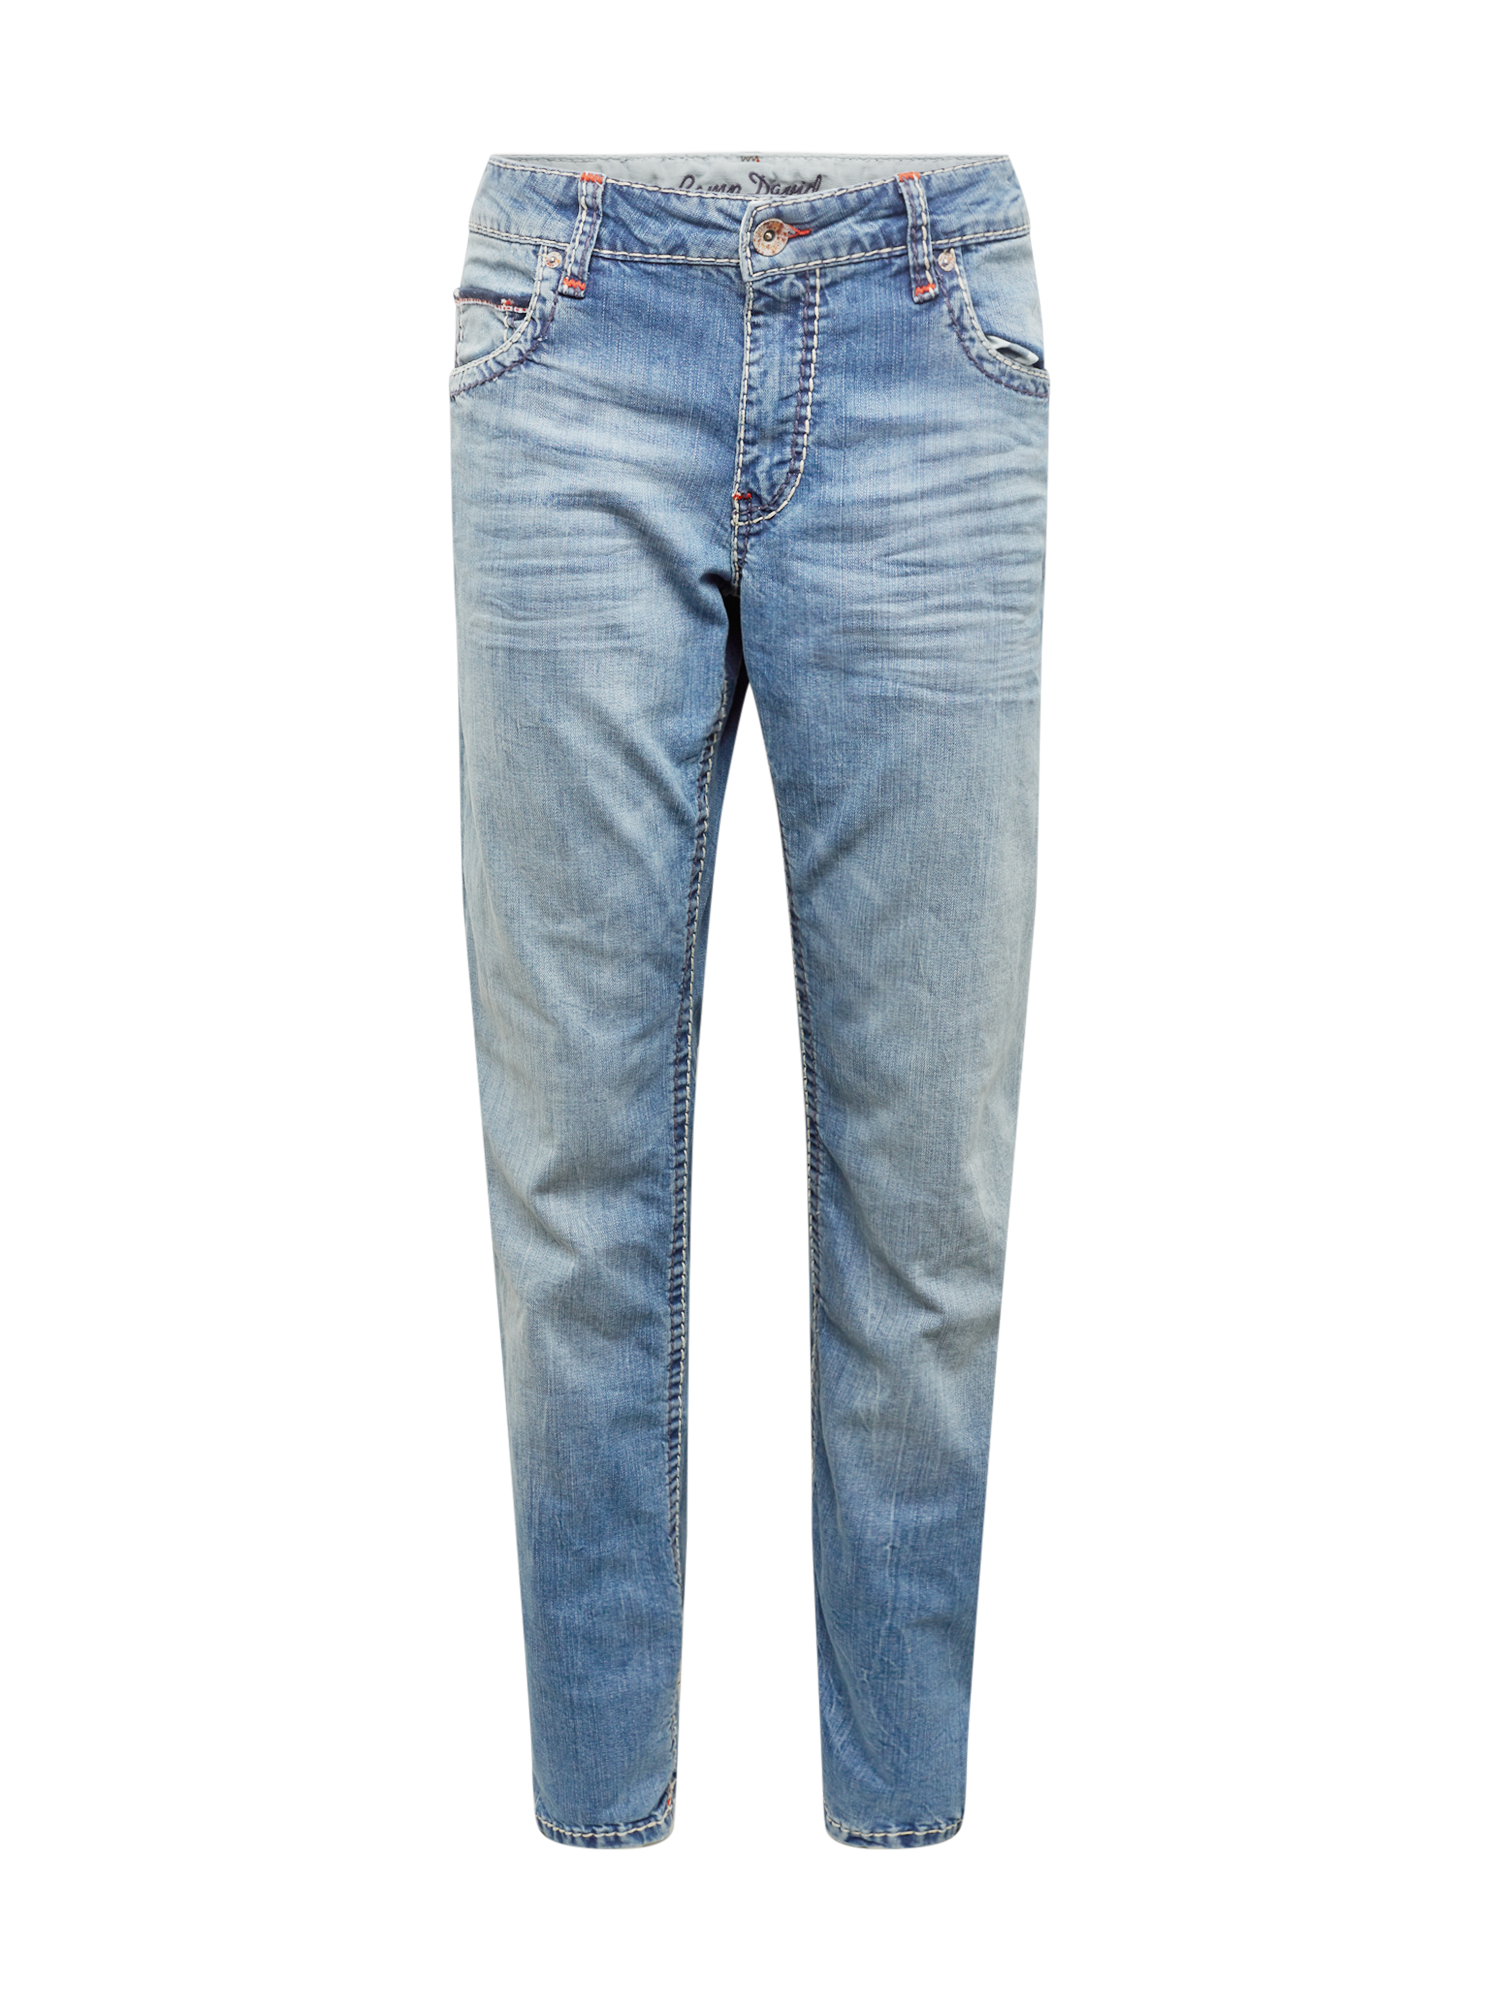 Jeans zYaiF CAMP DAVID Jeans CO:NO:C622 Comfort Fit in Blu 